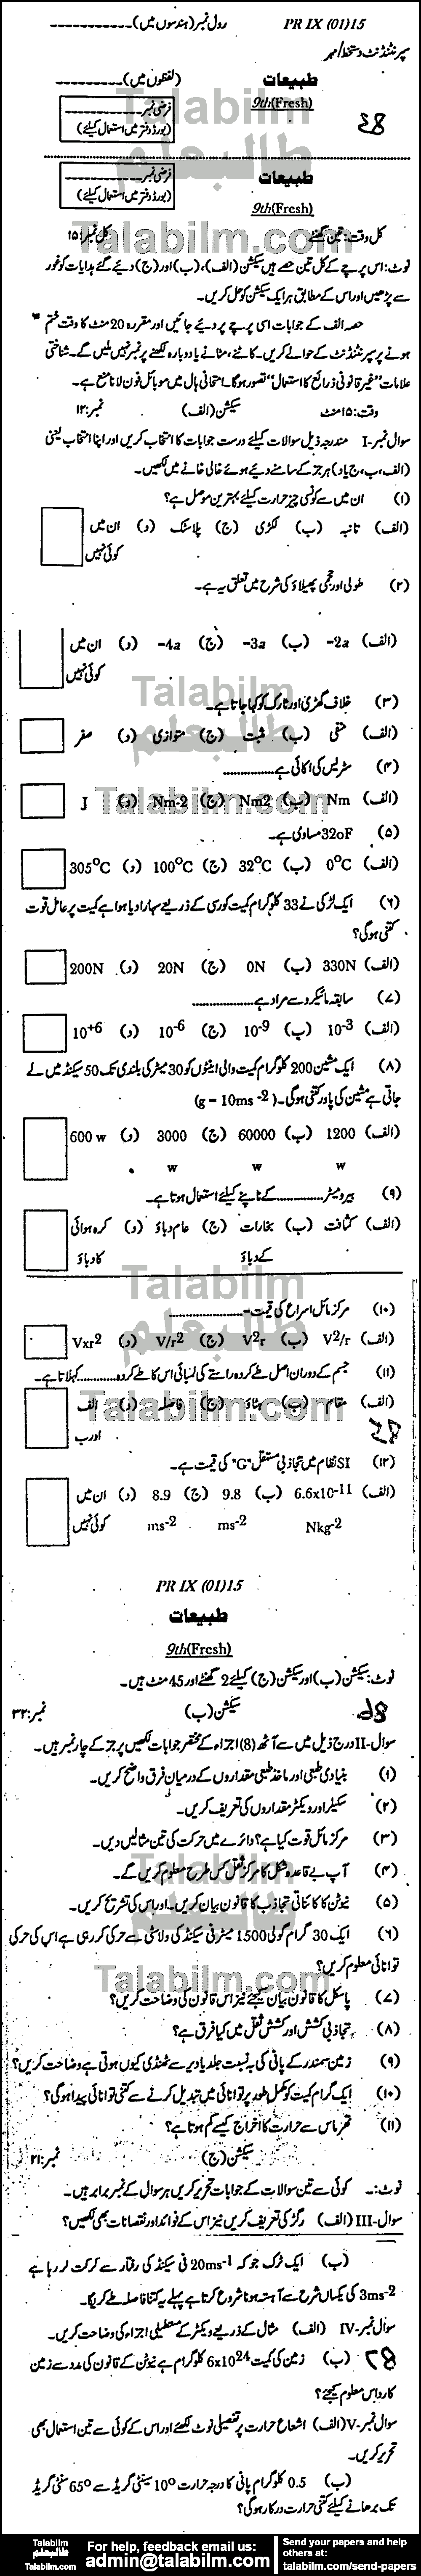 Physics 0 past paper for Urdu Medium 2015 Group-I